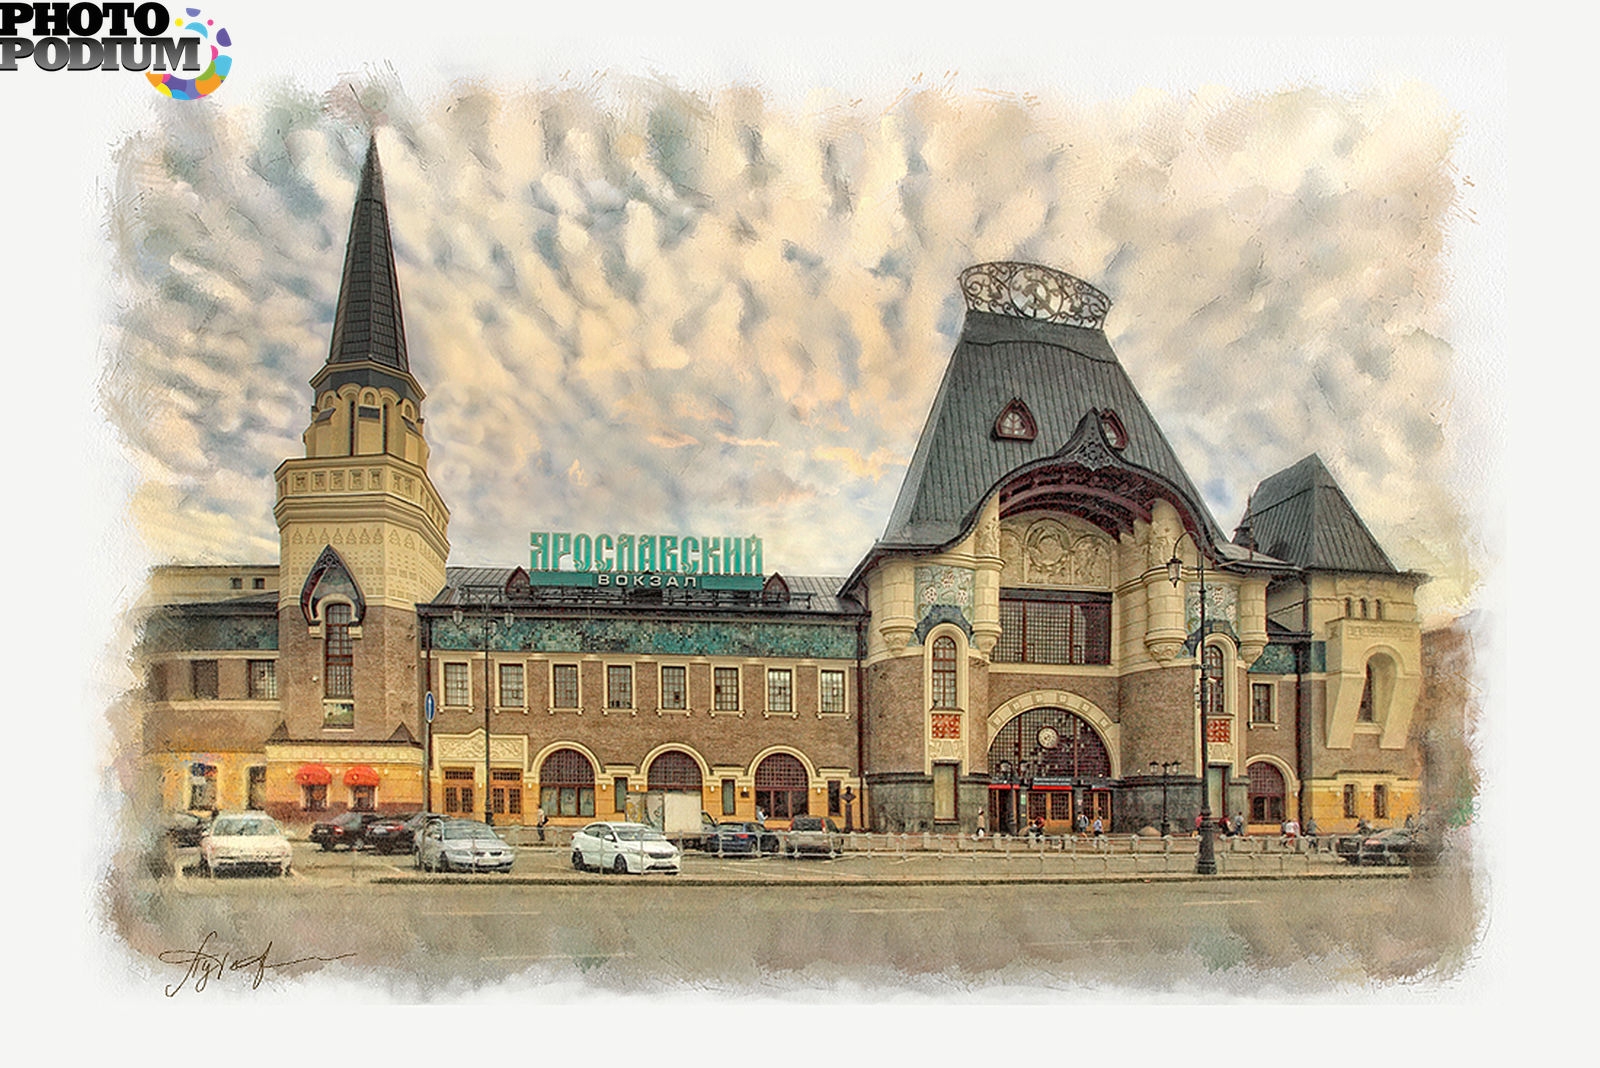 казанский ярославский вокзал москва